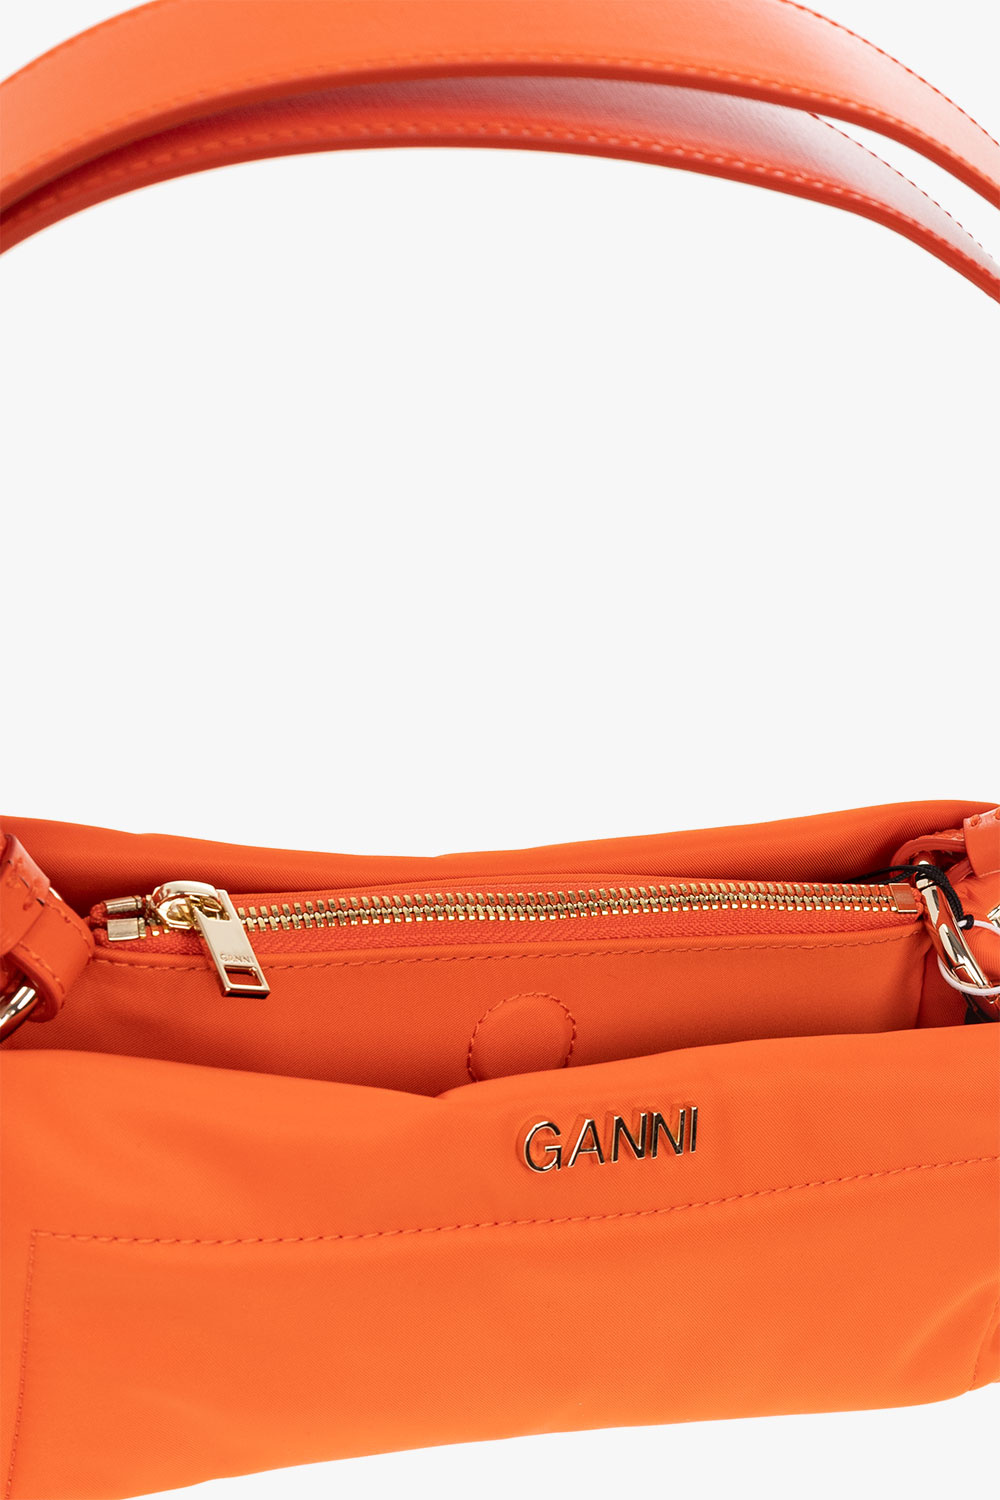 Ganni The Bag Love